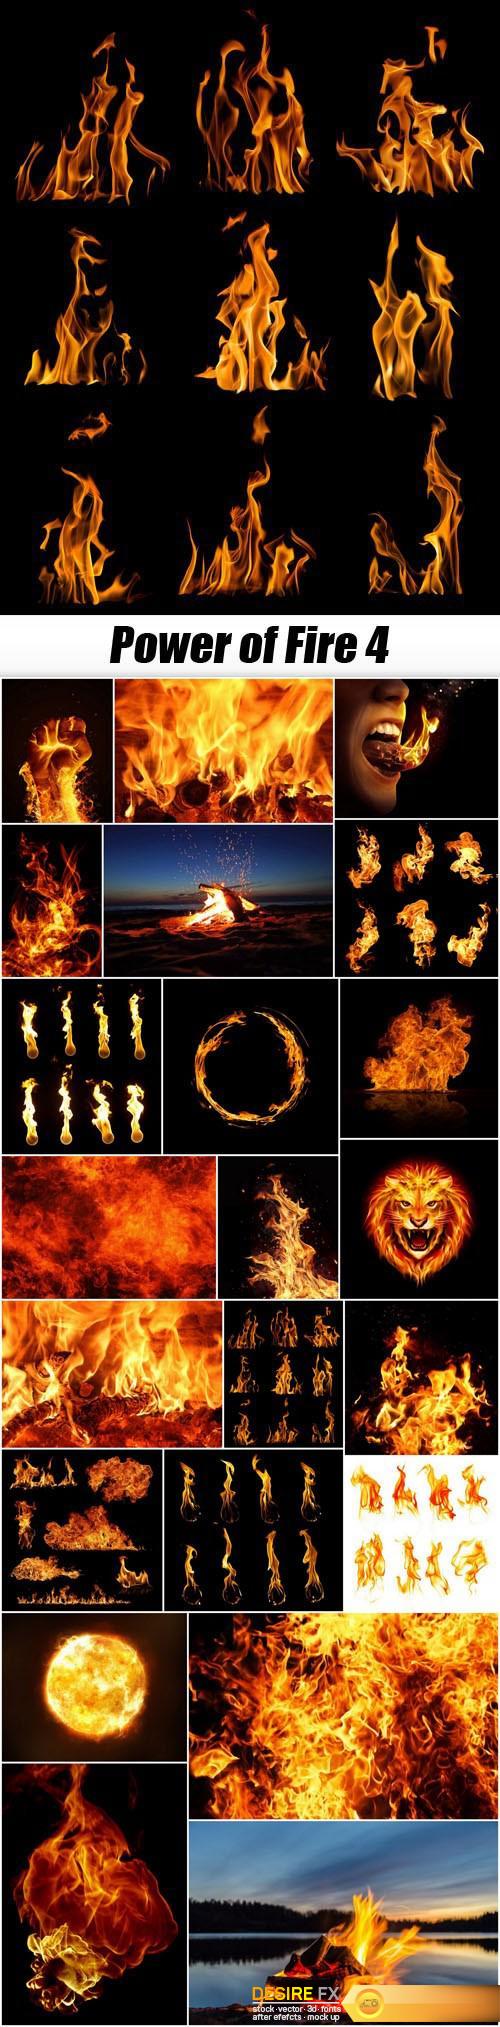 Power of Fire 4 - 22xUHQ JPEG